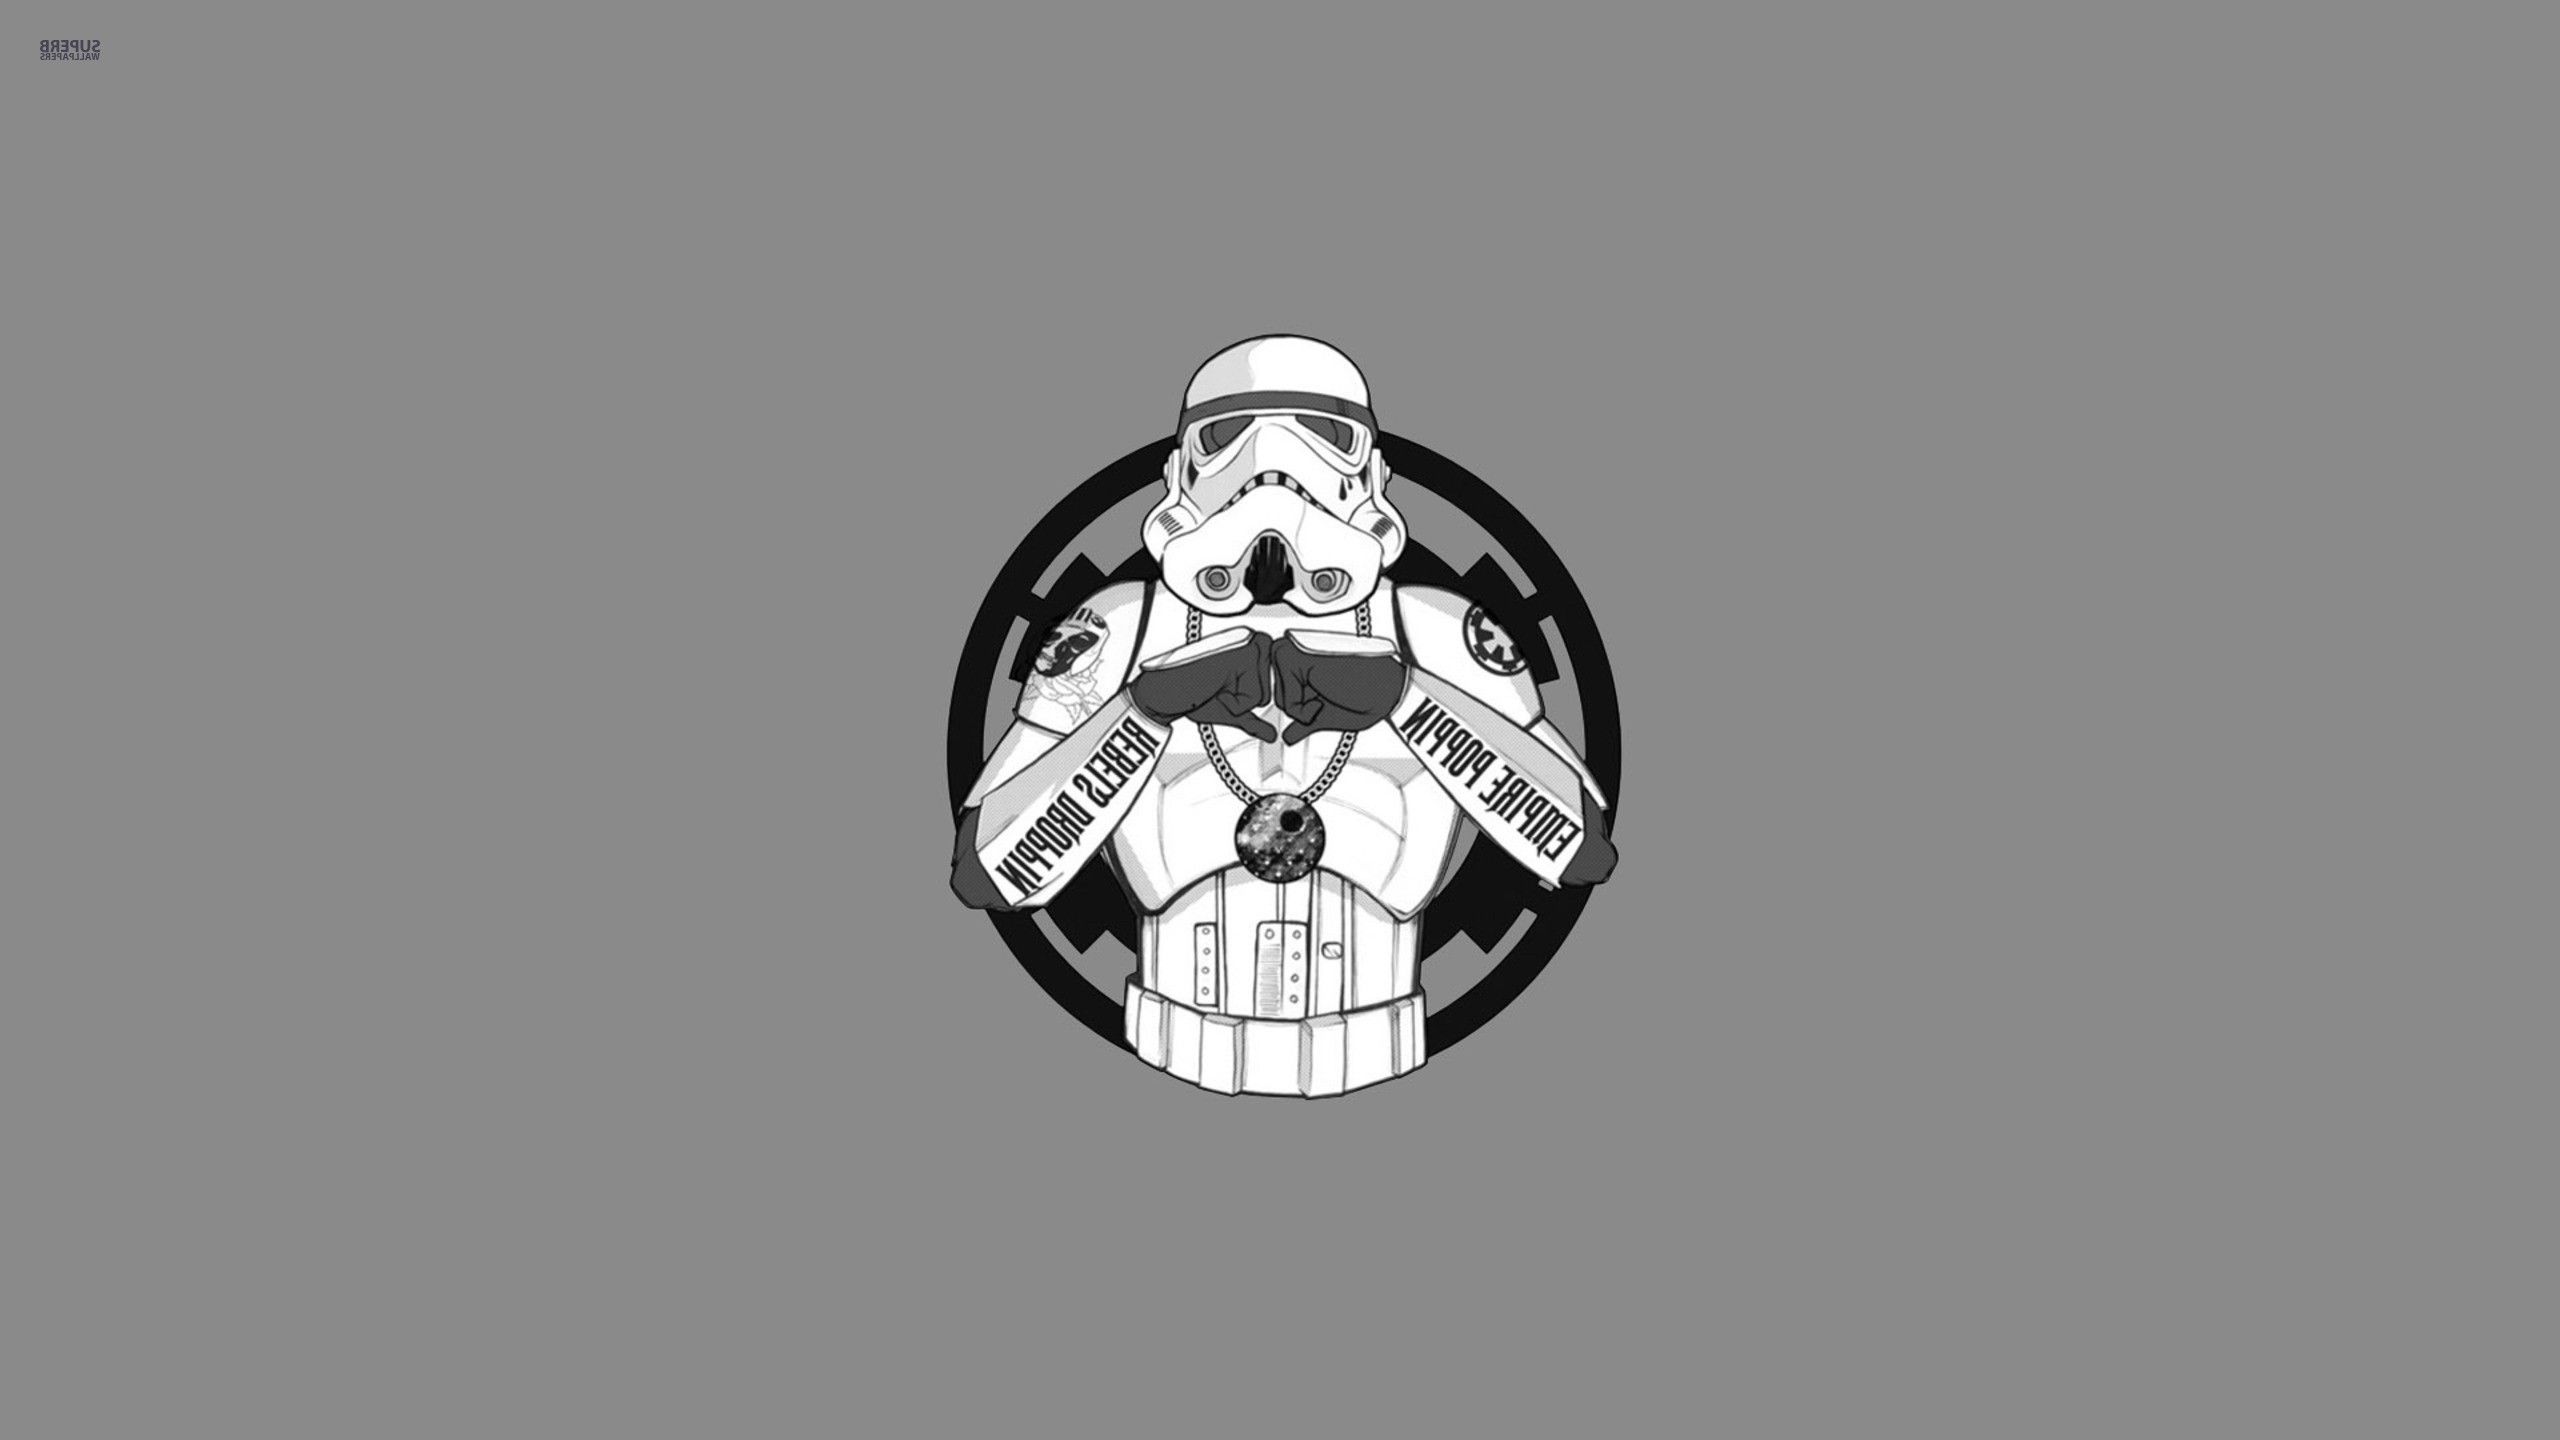 Clone Trooper Wallpaper